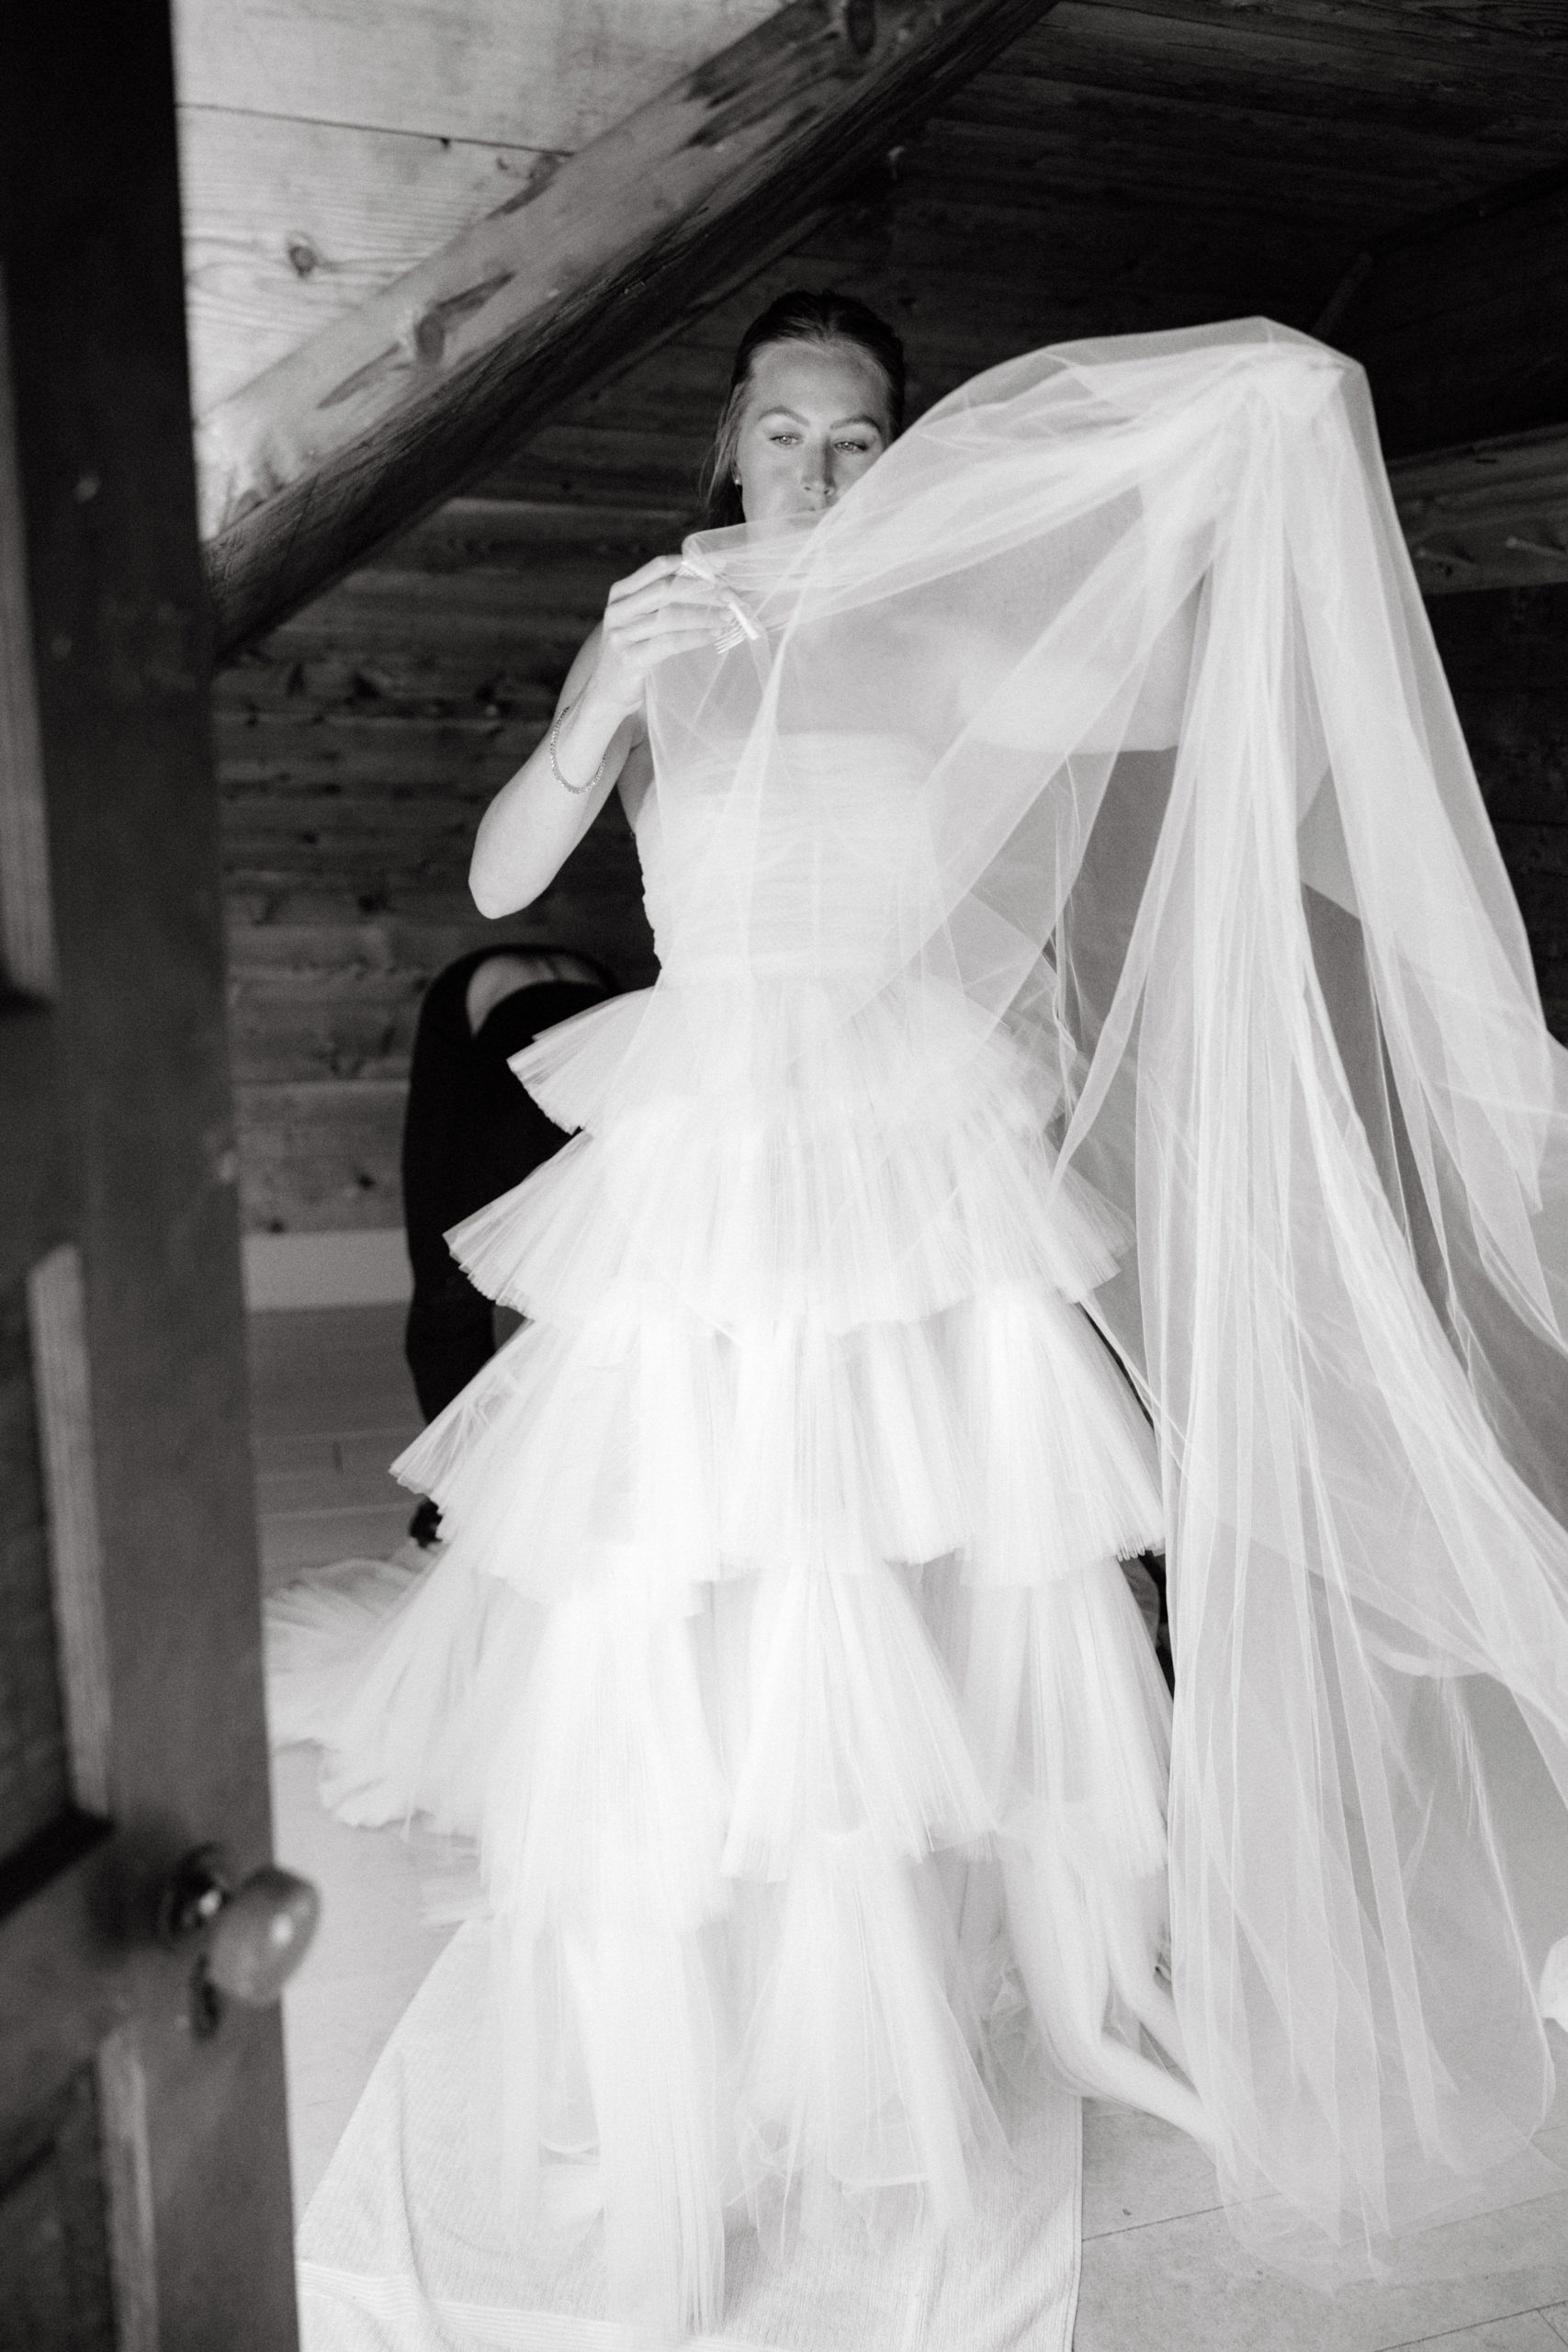 Editorial image of the bride wearing an Oscar De la Renta wedding dress. Image by Jenny Fu Studio